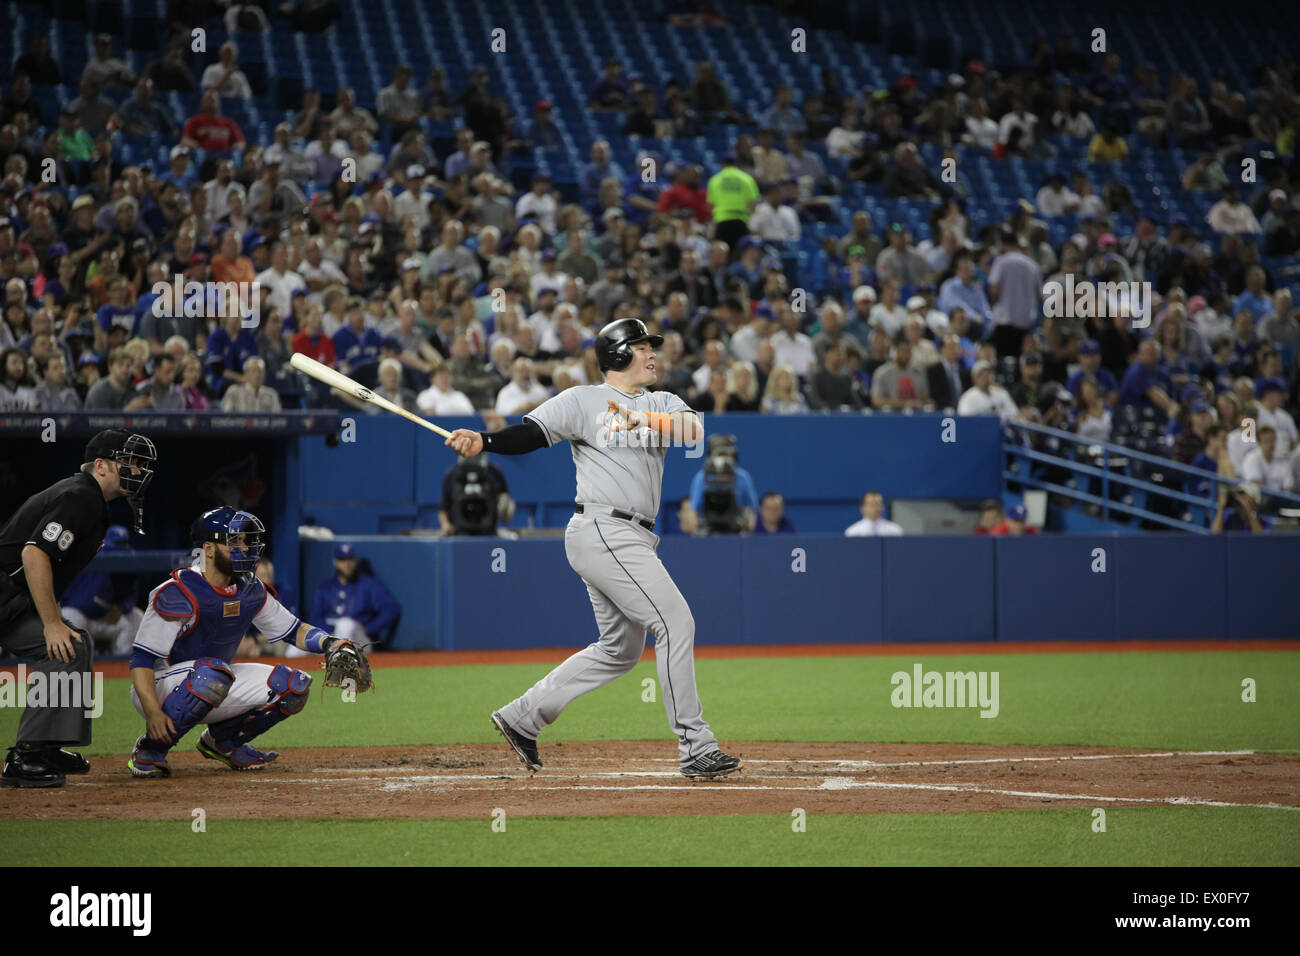 MLB baseball player swinging bat Banque D'Images